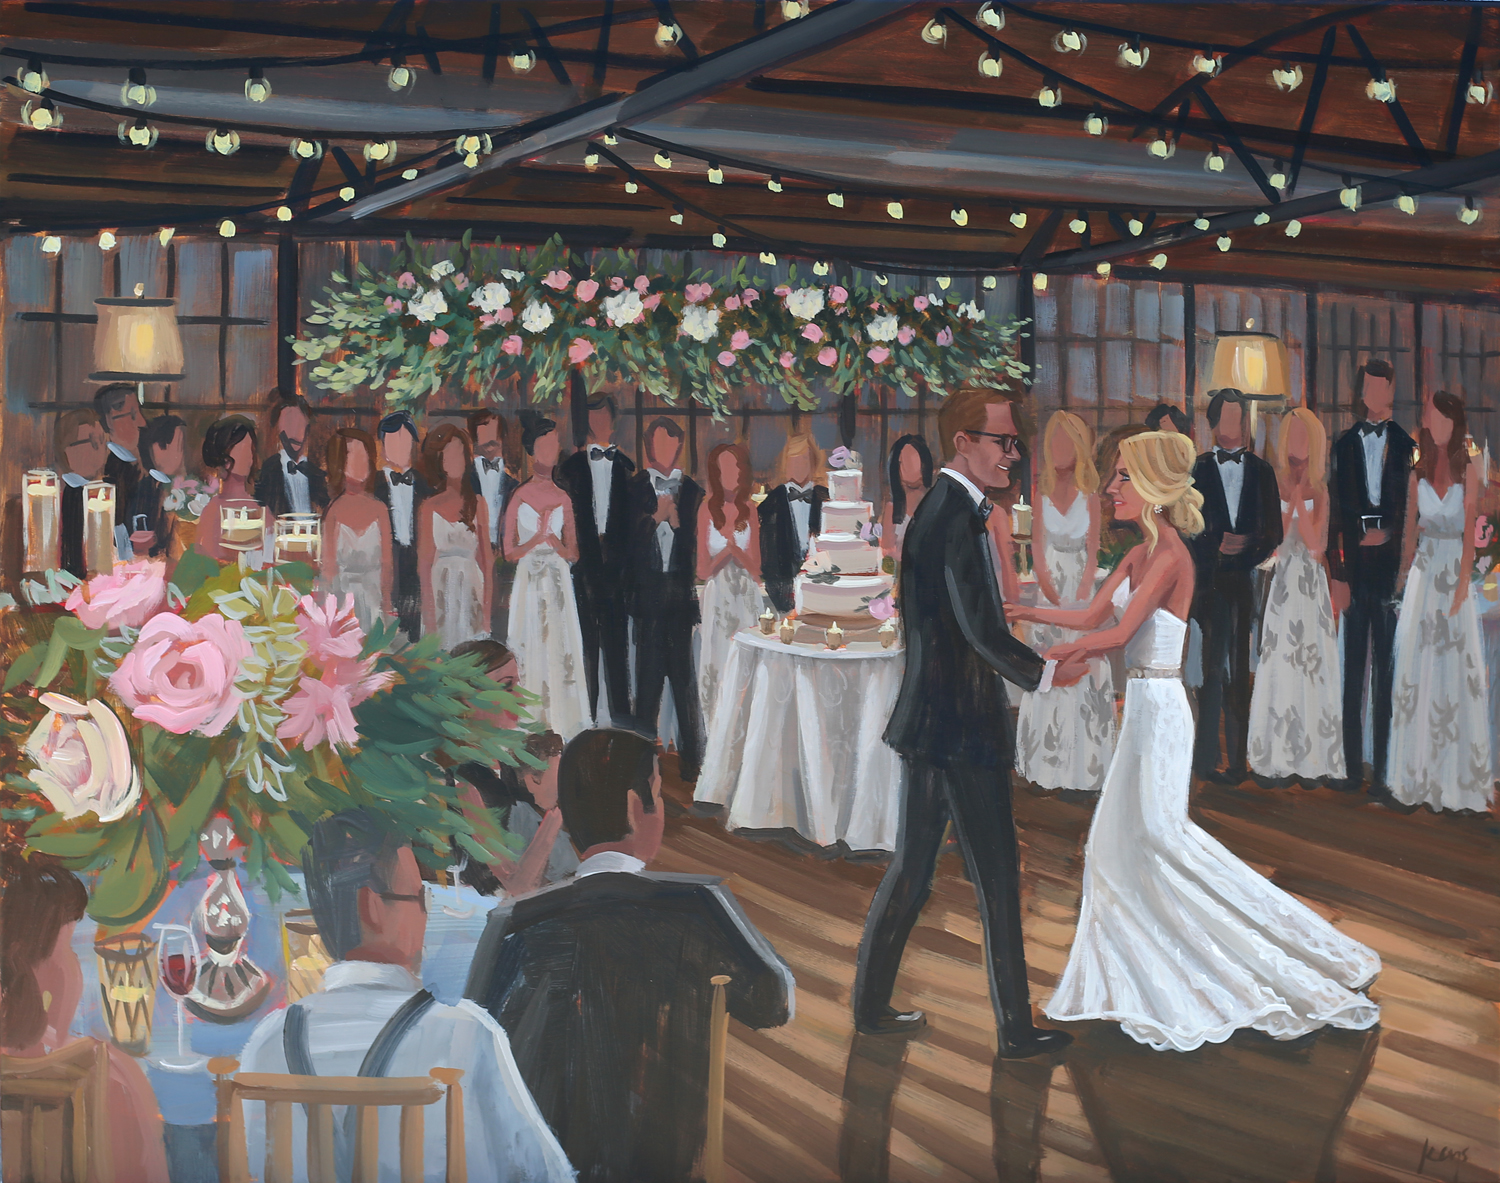 Live wedding painter, Ben Keys, captured Tori + Carter's lovely first dance inside Atlanta's Tuscan inspired venue at Summerour Studio.